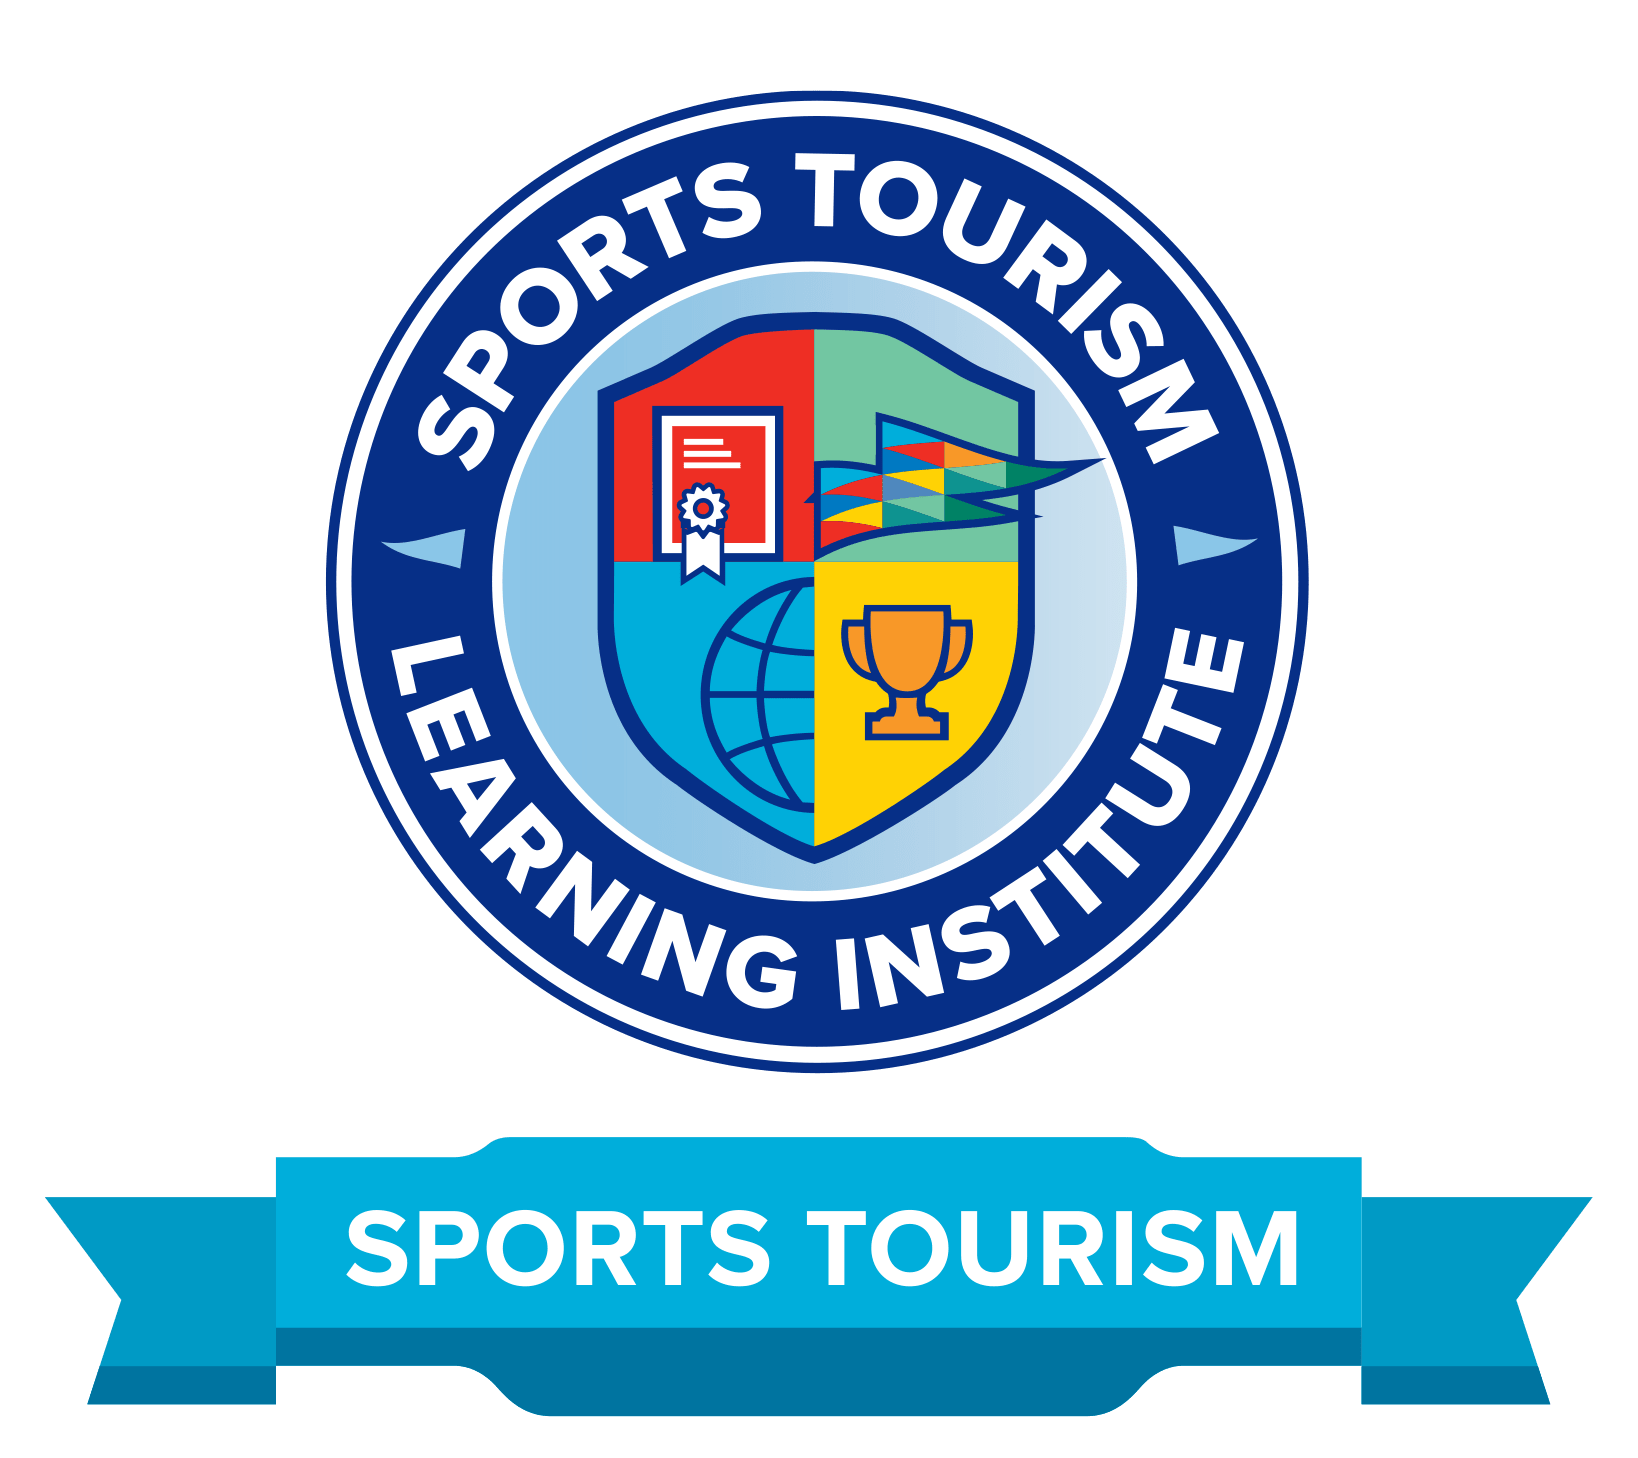 international sports and tourism federation of municipalities of the world